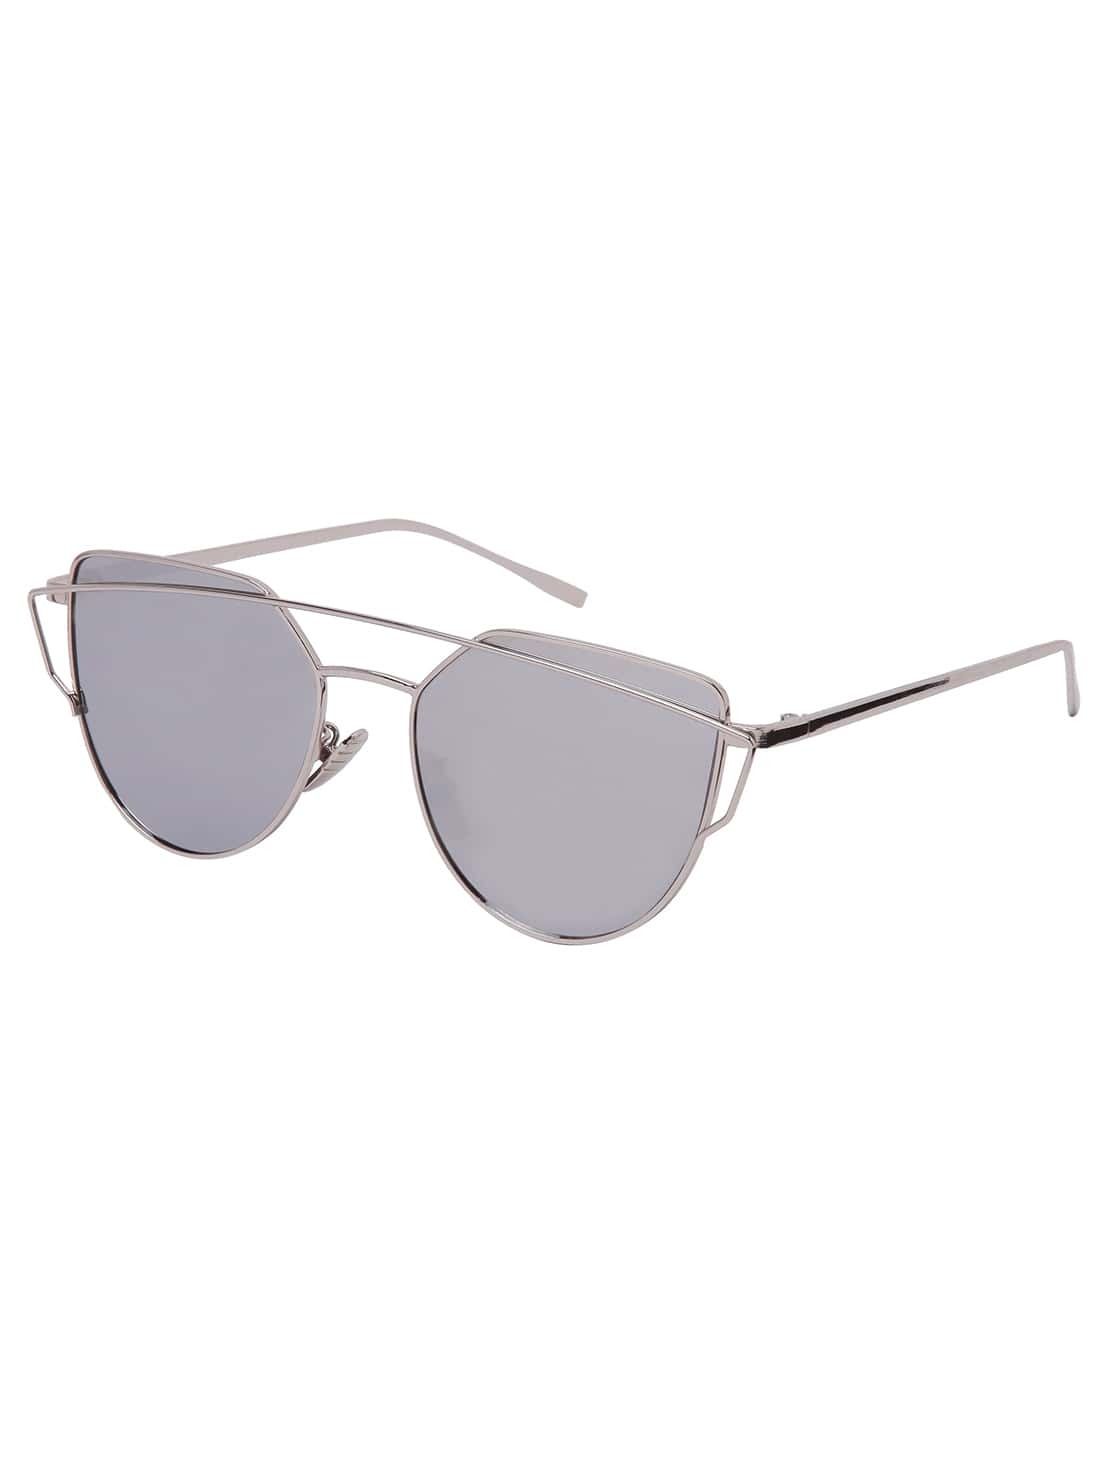 Silver Metal Frame Double Bridge Mirrored Sunglasses | SHEIN